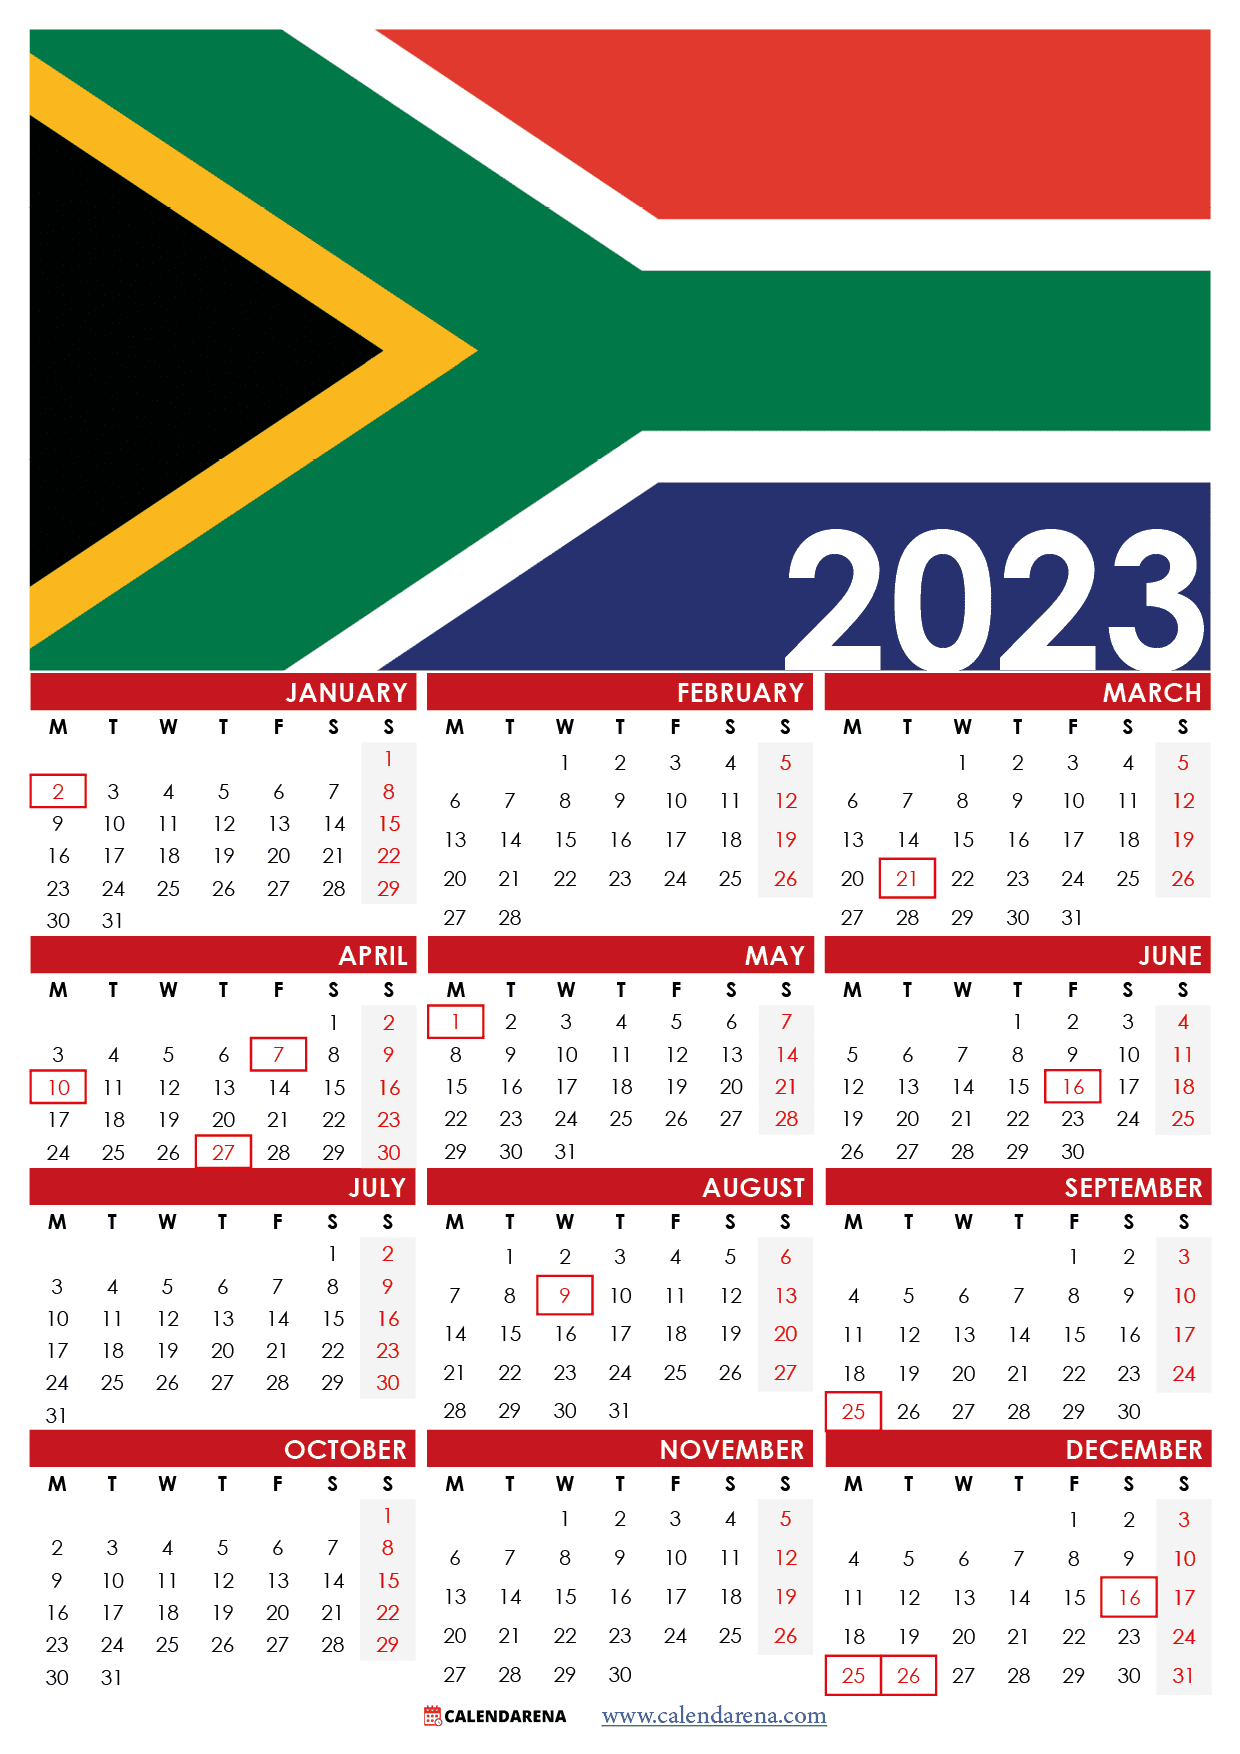 Calendar 2025 South Africa Excel 